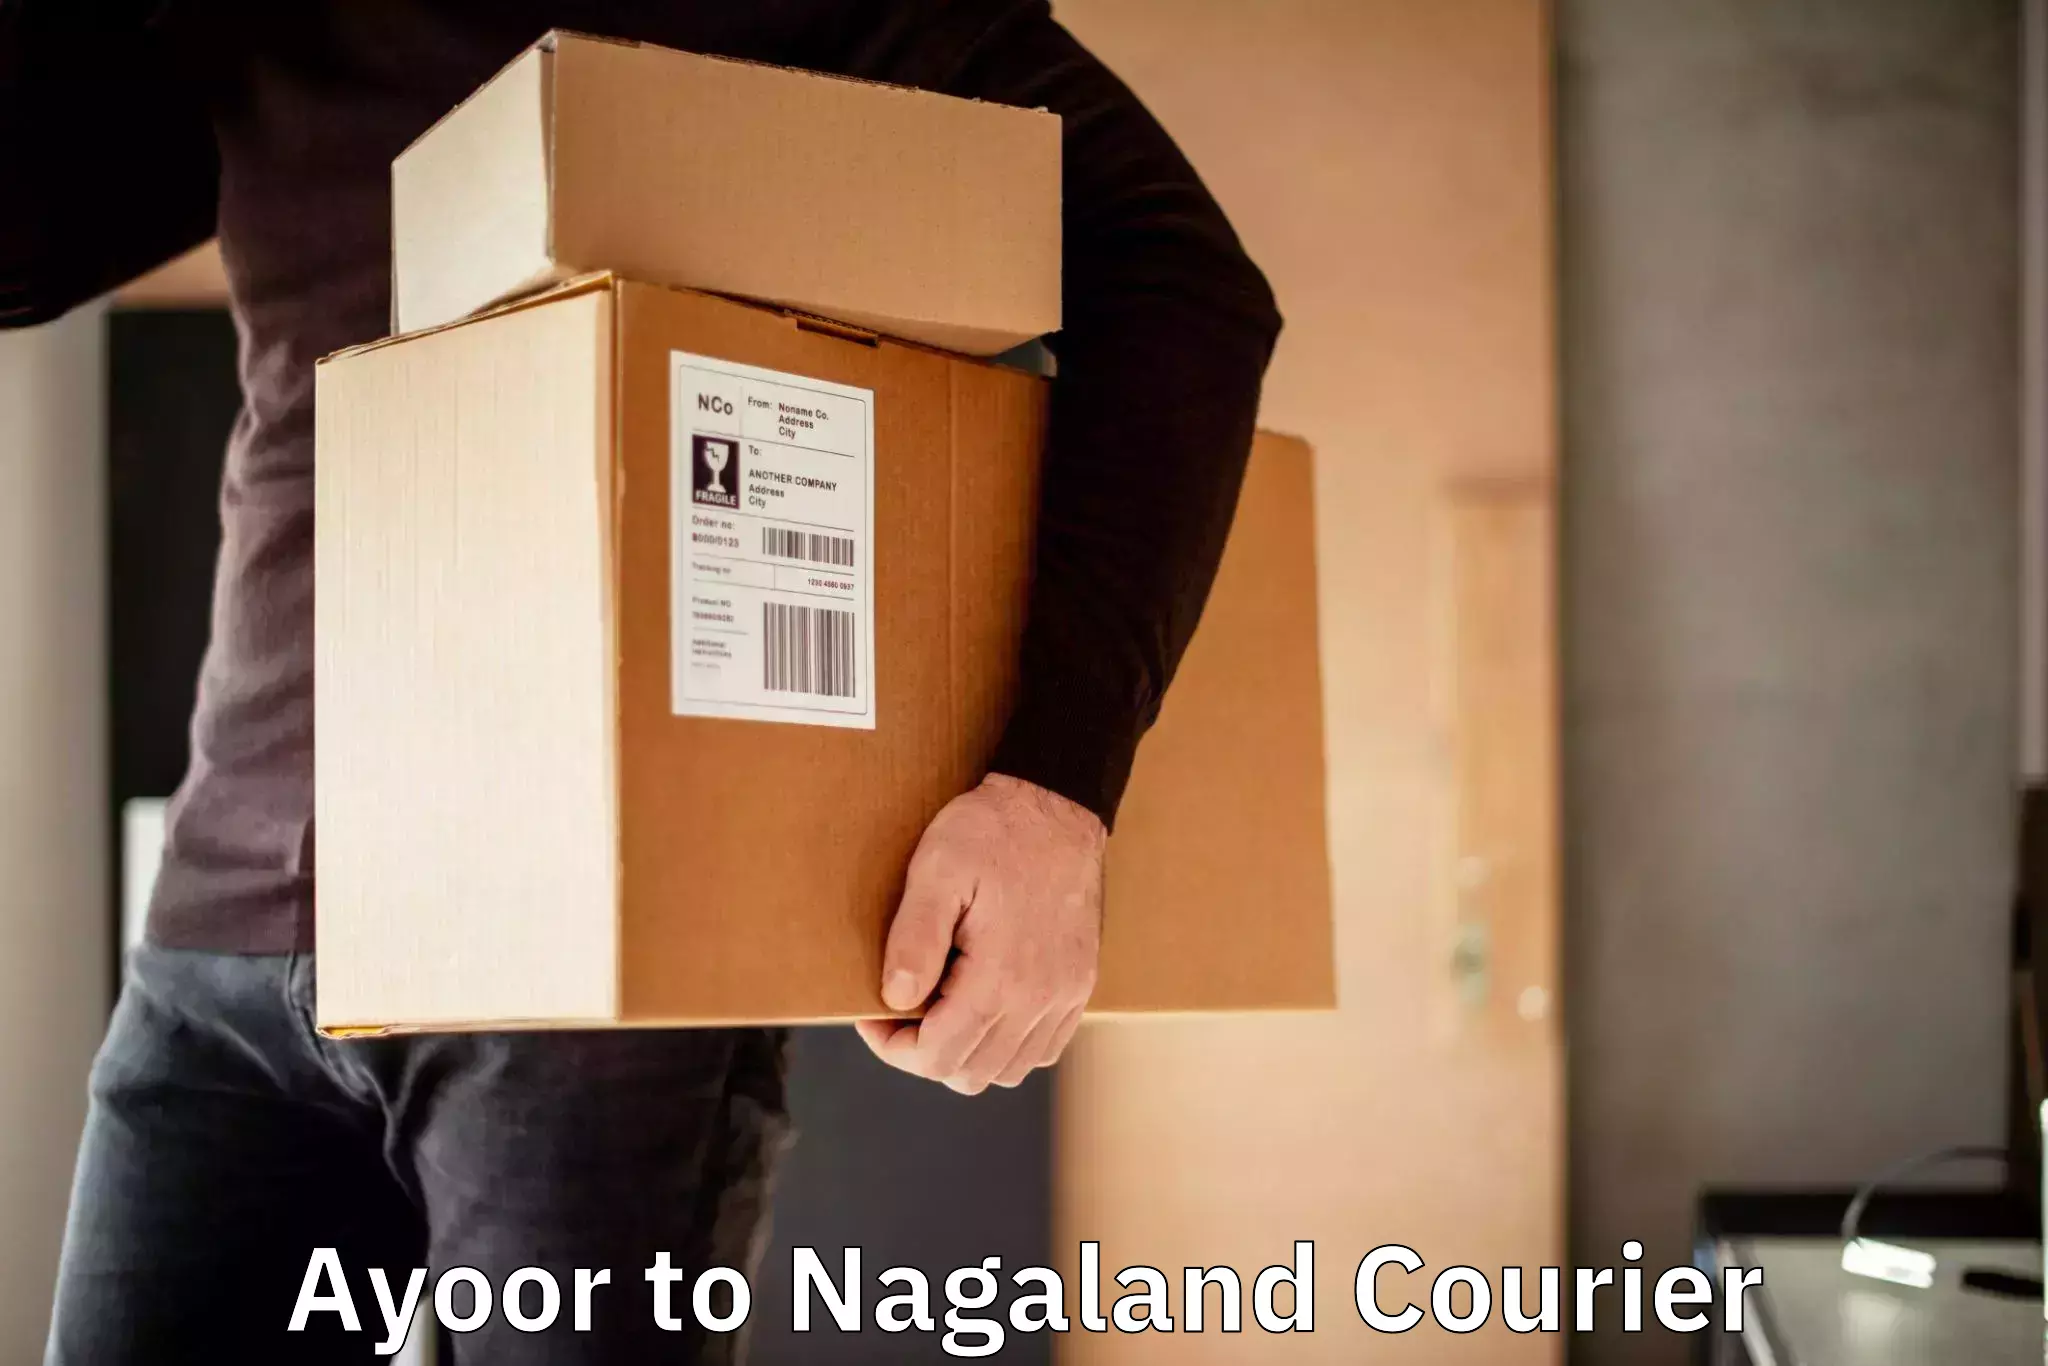 Express logistics providers Ayoor to Nagaland